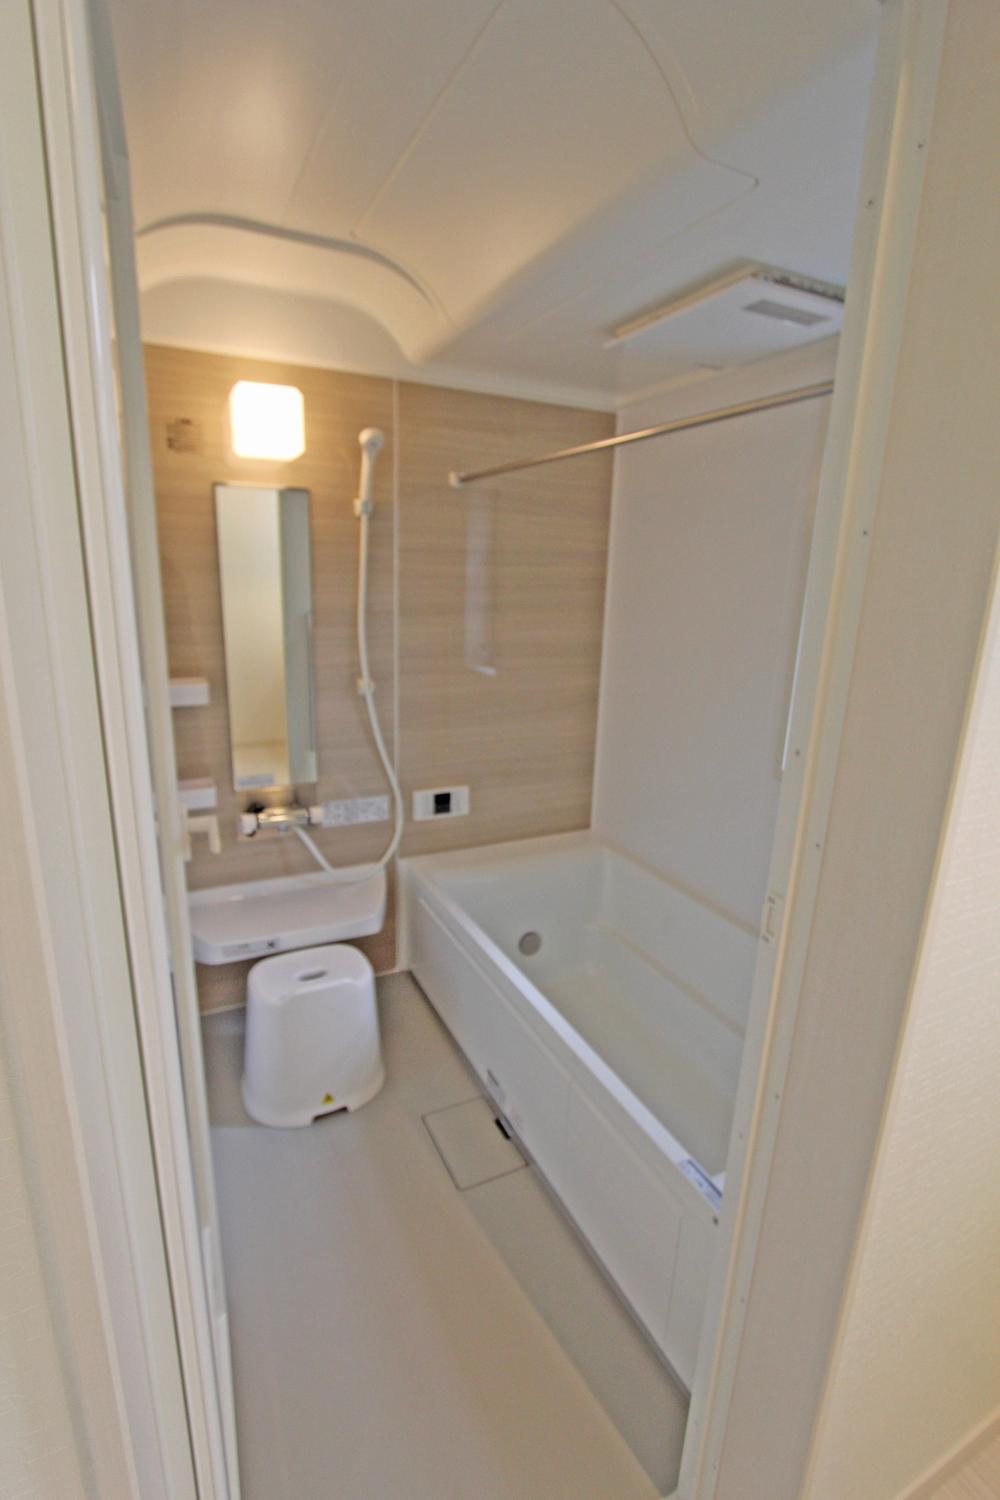 Bathroom. Indoor (12 May 2013) Shooting 1 pyeong type of unit bus